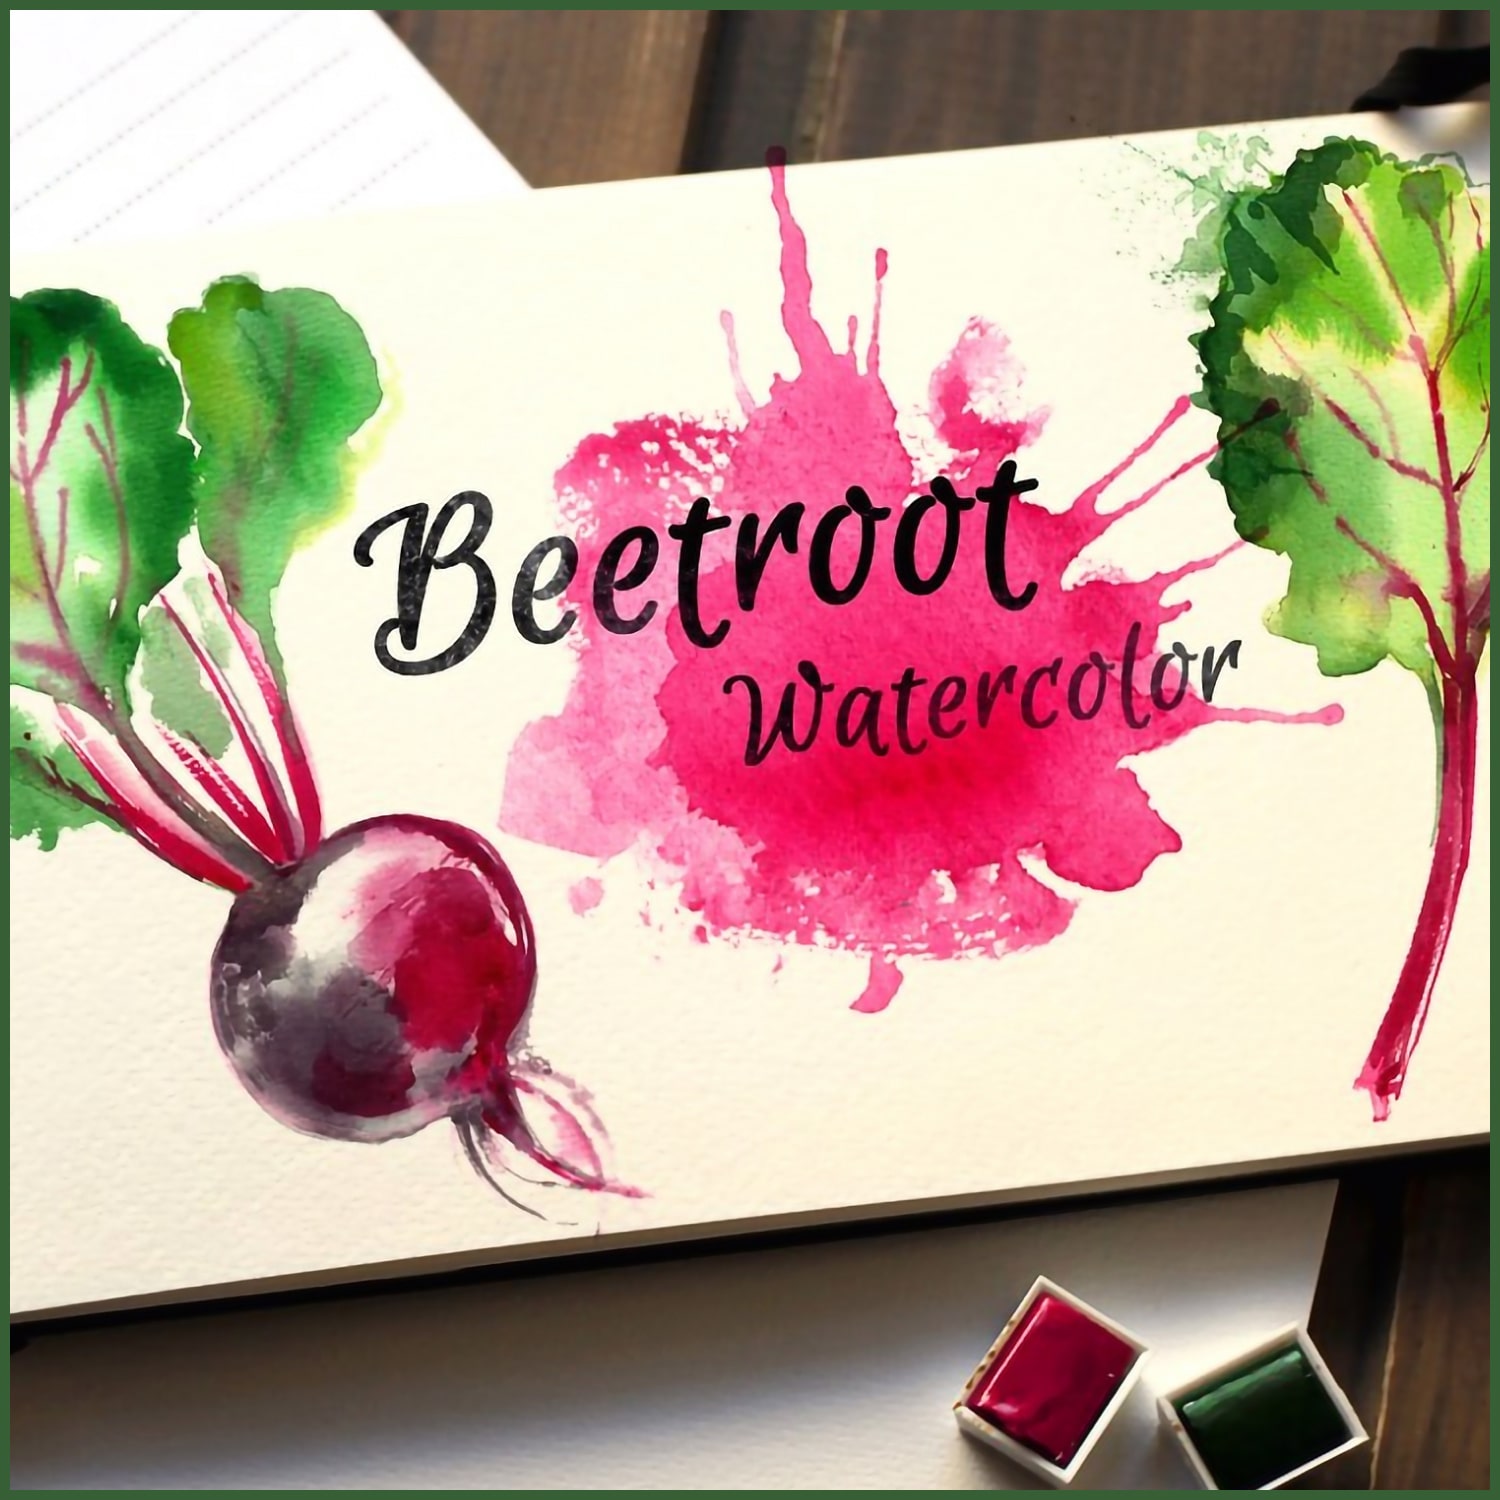 Beetroot. Watercolor sketch food cover.